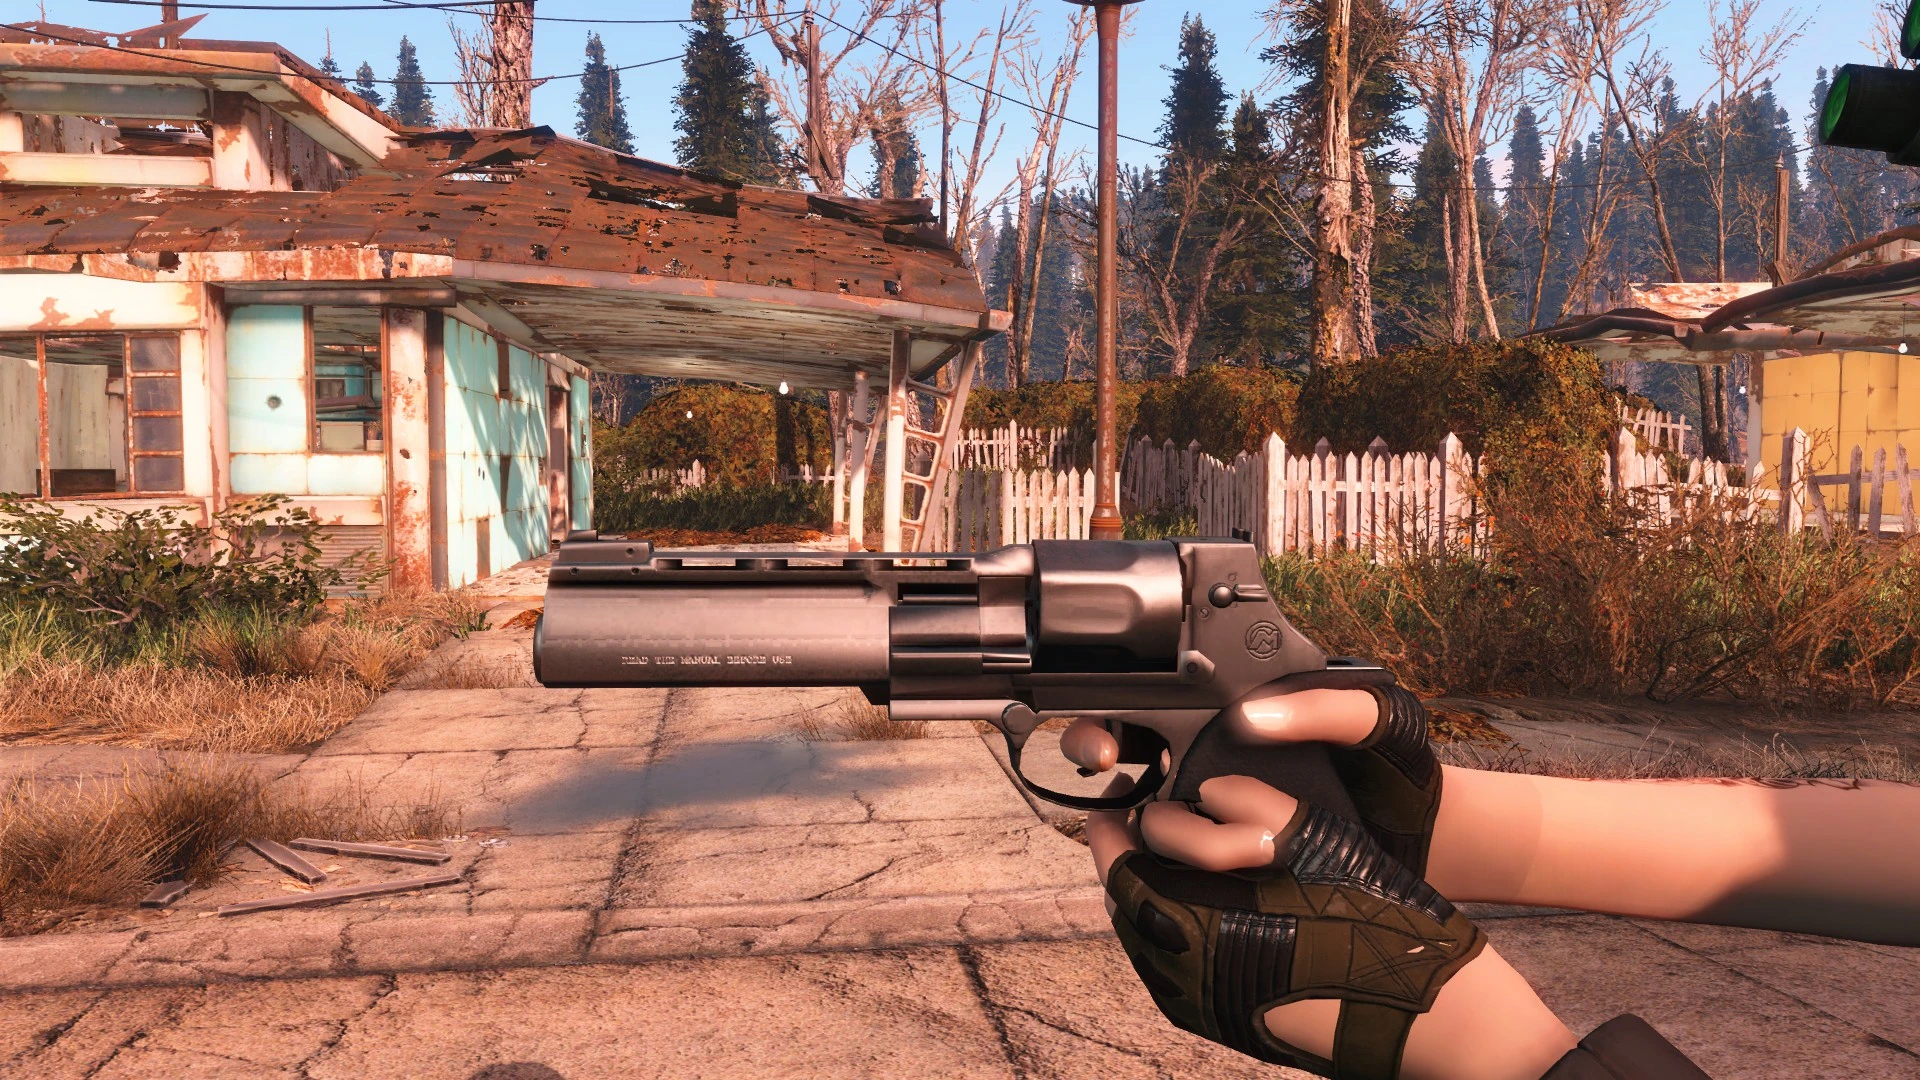 Mateba unica near release at Fallout 4 Nexus - Mods and community